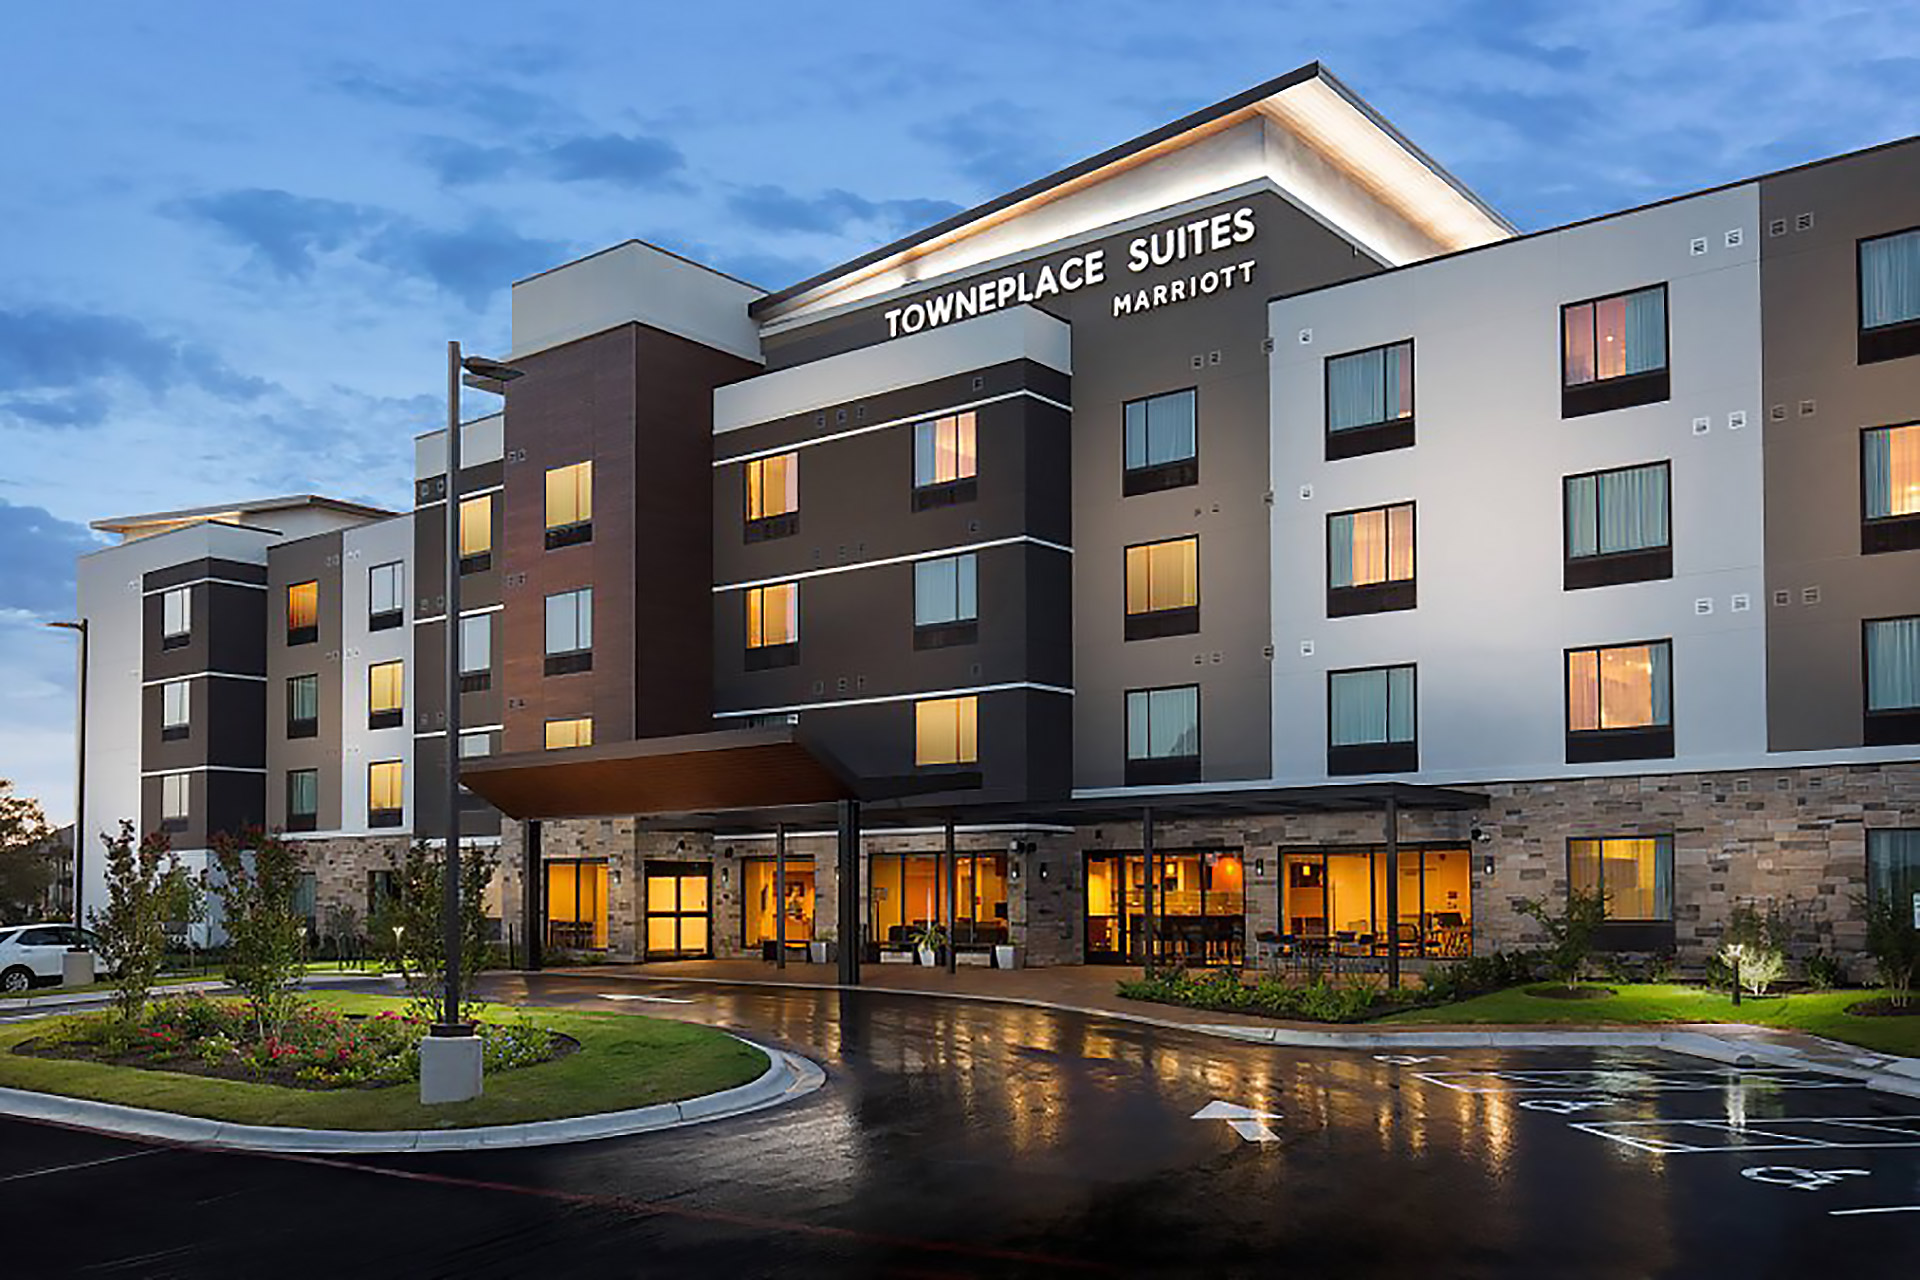 Dakota Pacific Austin Marriott Townplace Suites